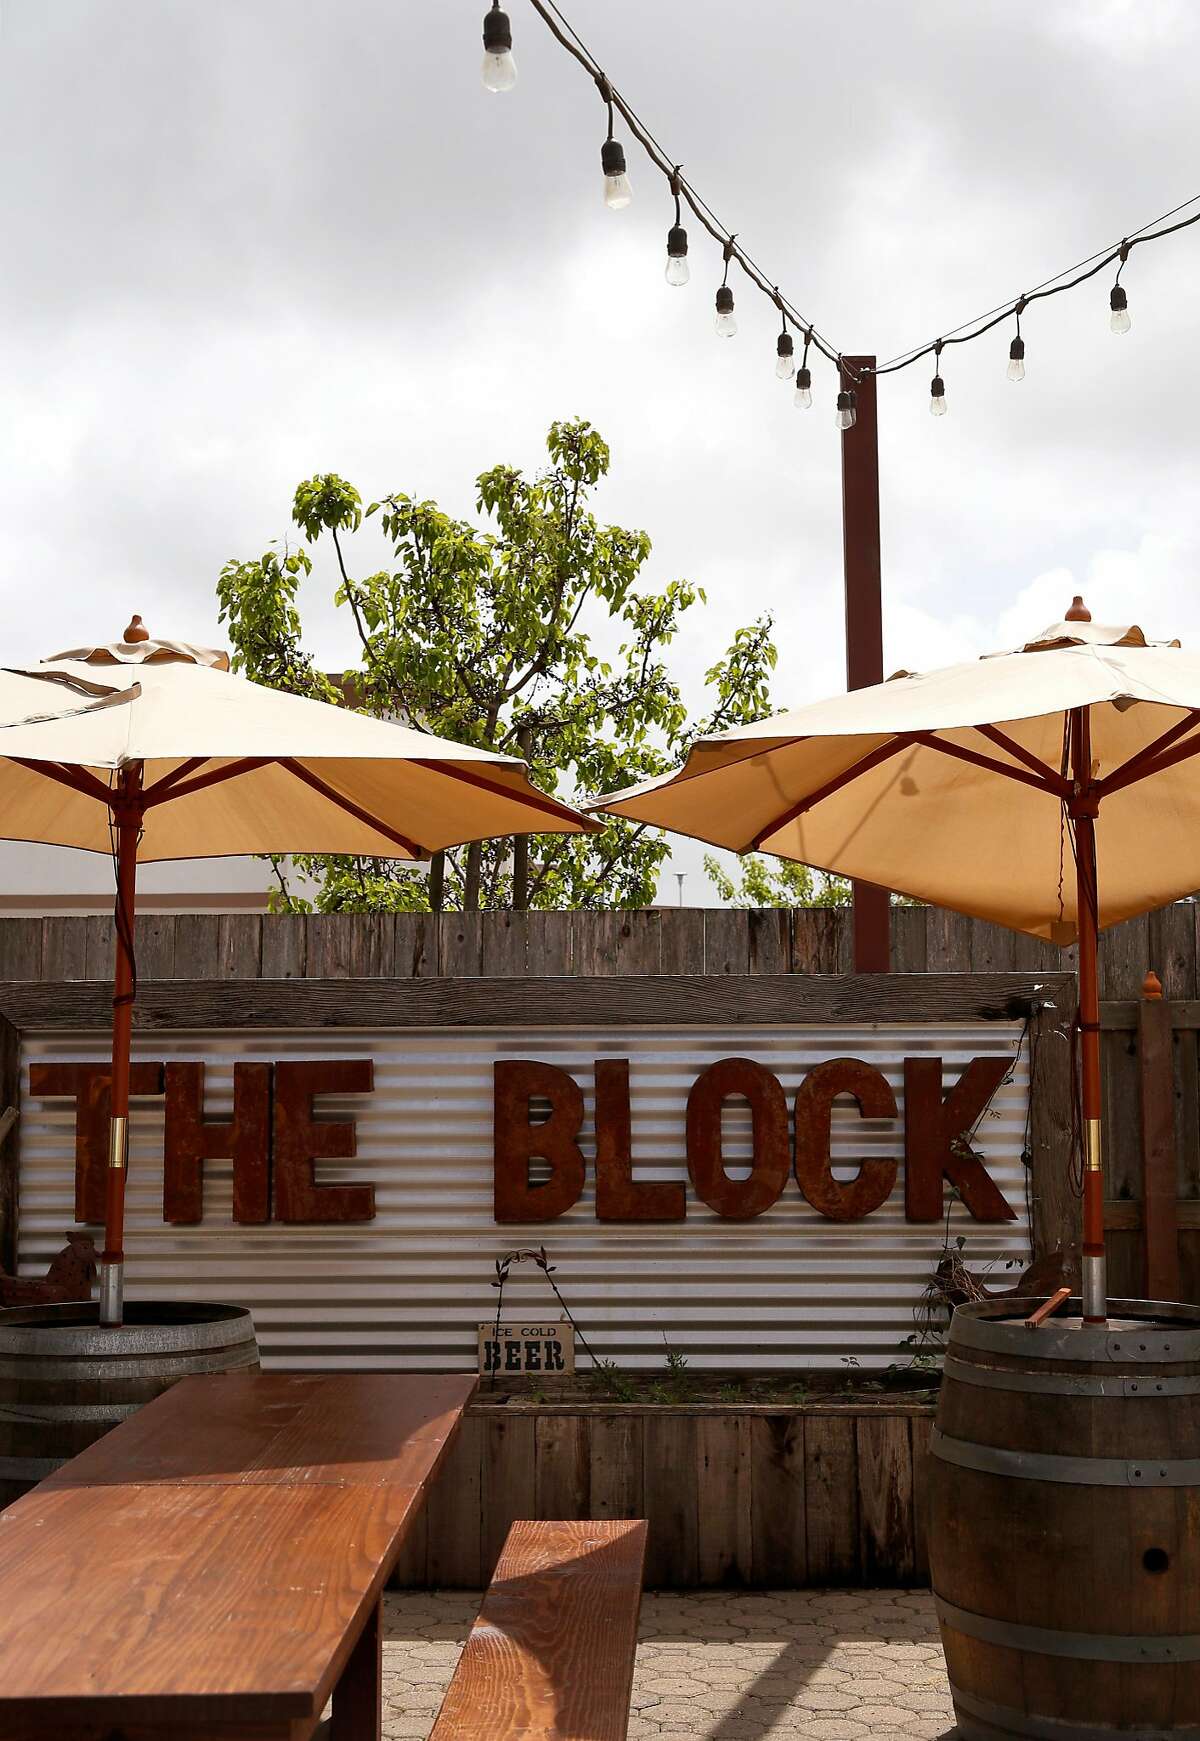 The Block, a food park, bar and sometimes live music spot in Petaluma.